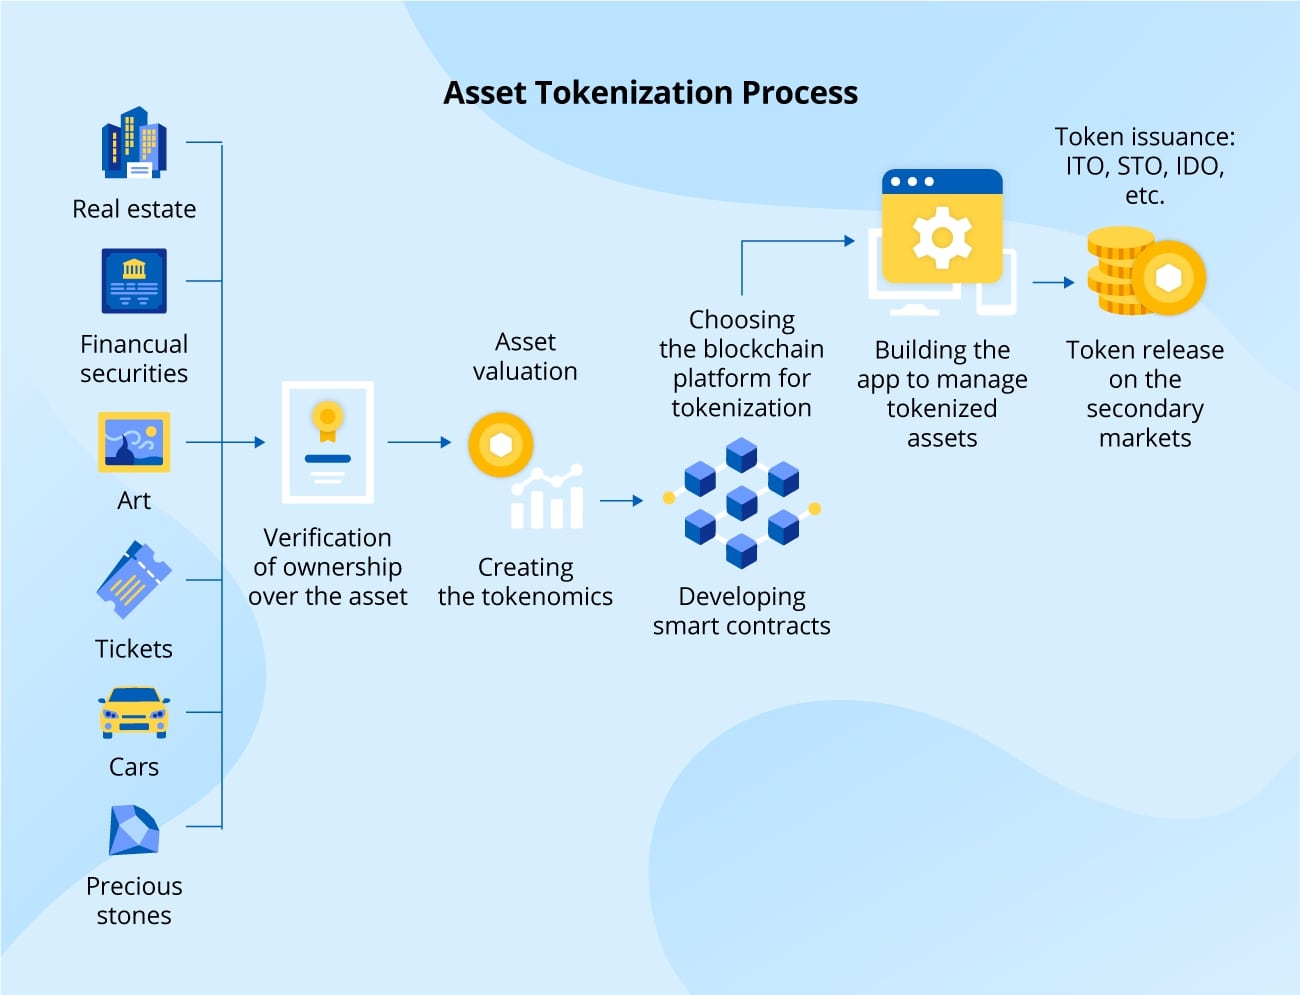 An image explaining the asset tokenization process